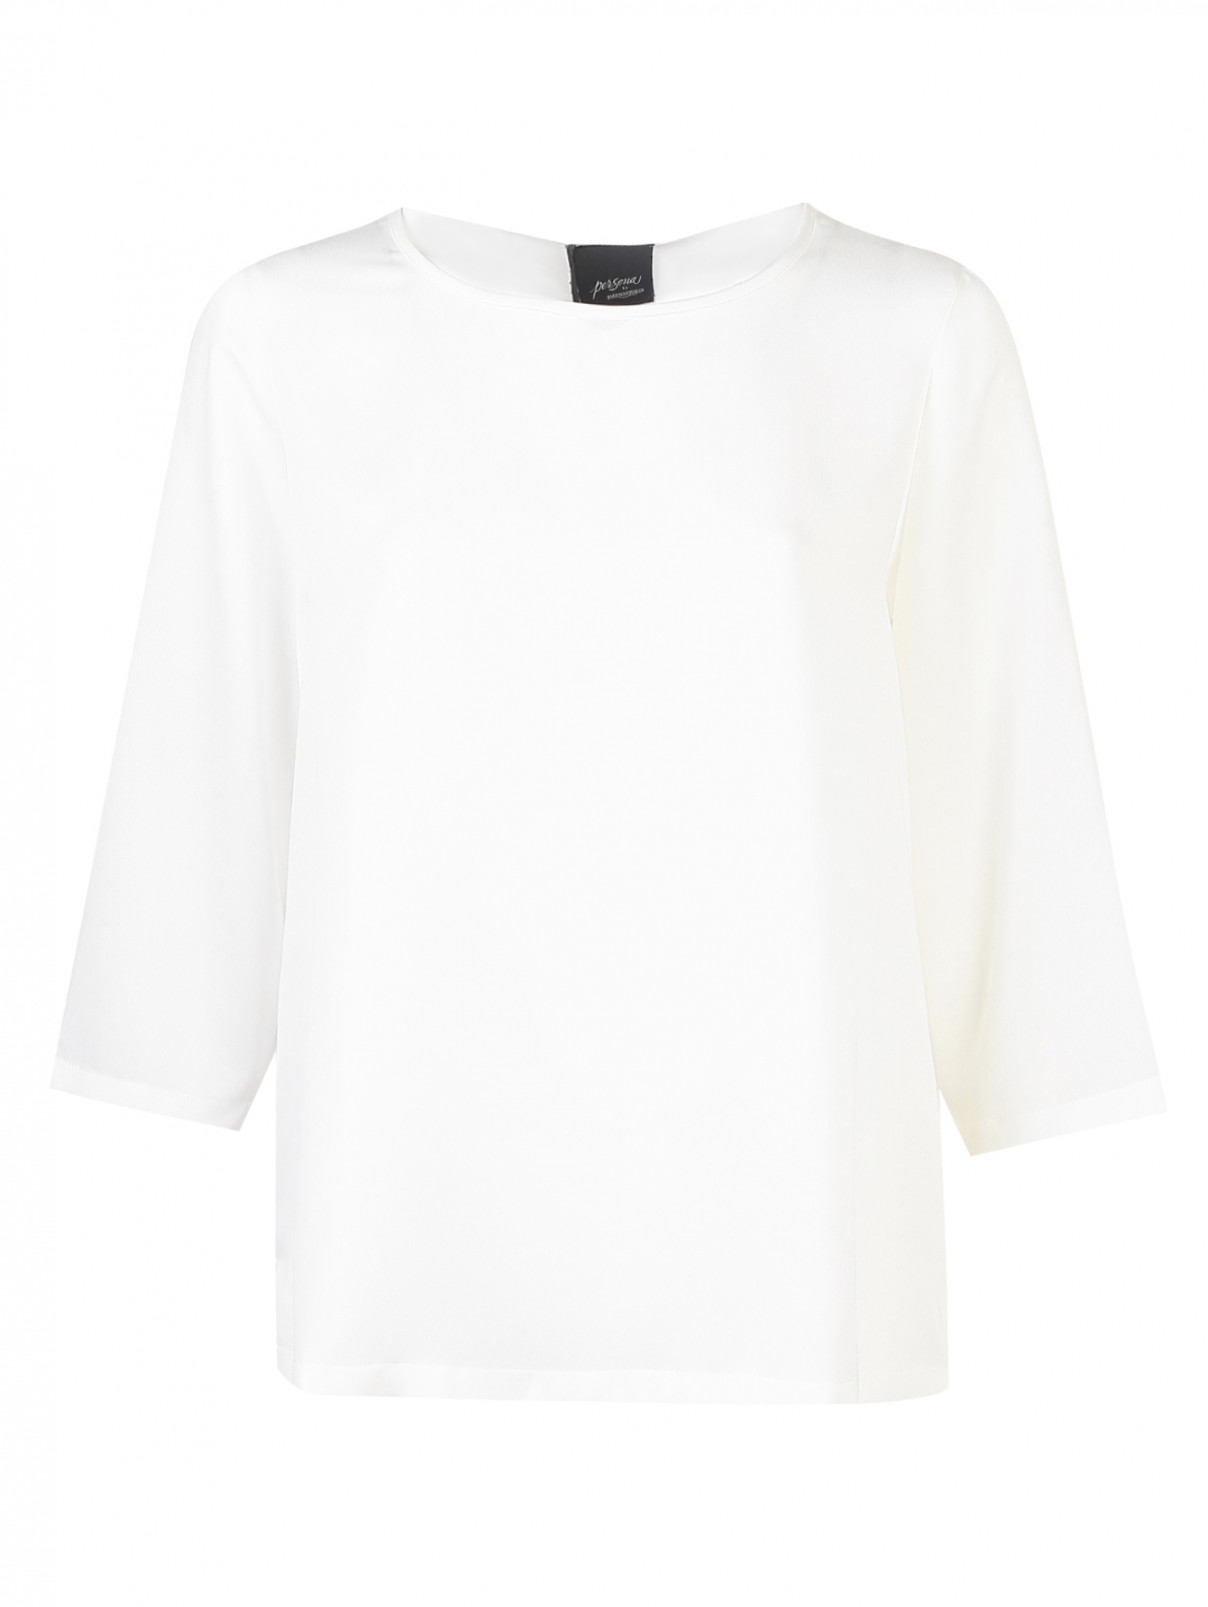 Блуза с рукавом 3/4 Persona by Marina Rinaldi  –  Общий вид  – Цвет:  Белый